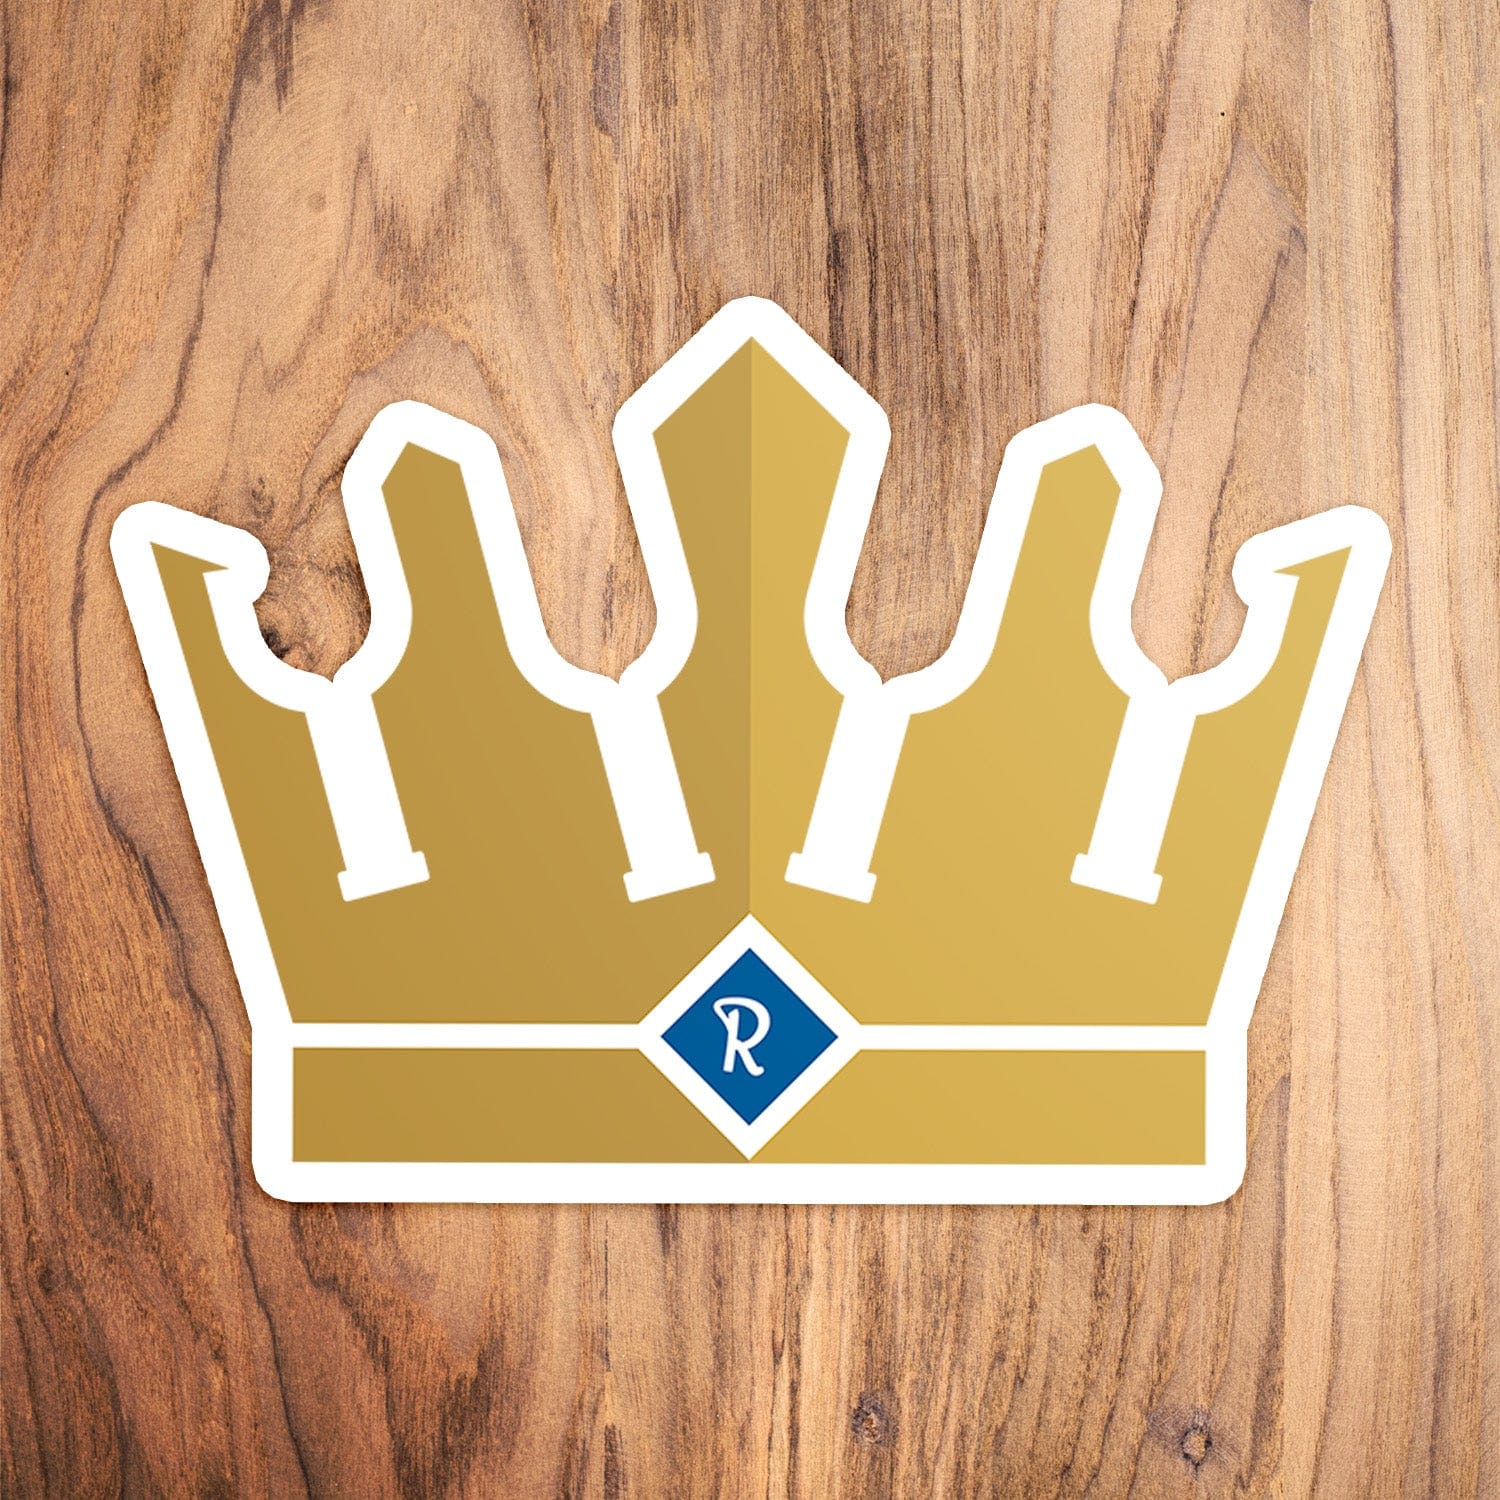 KC Swag Kansas City Royals gold, blue Bottle Crown vinyl die cut decal sticker on wood table